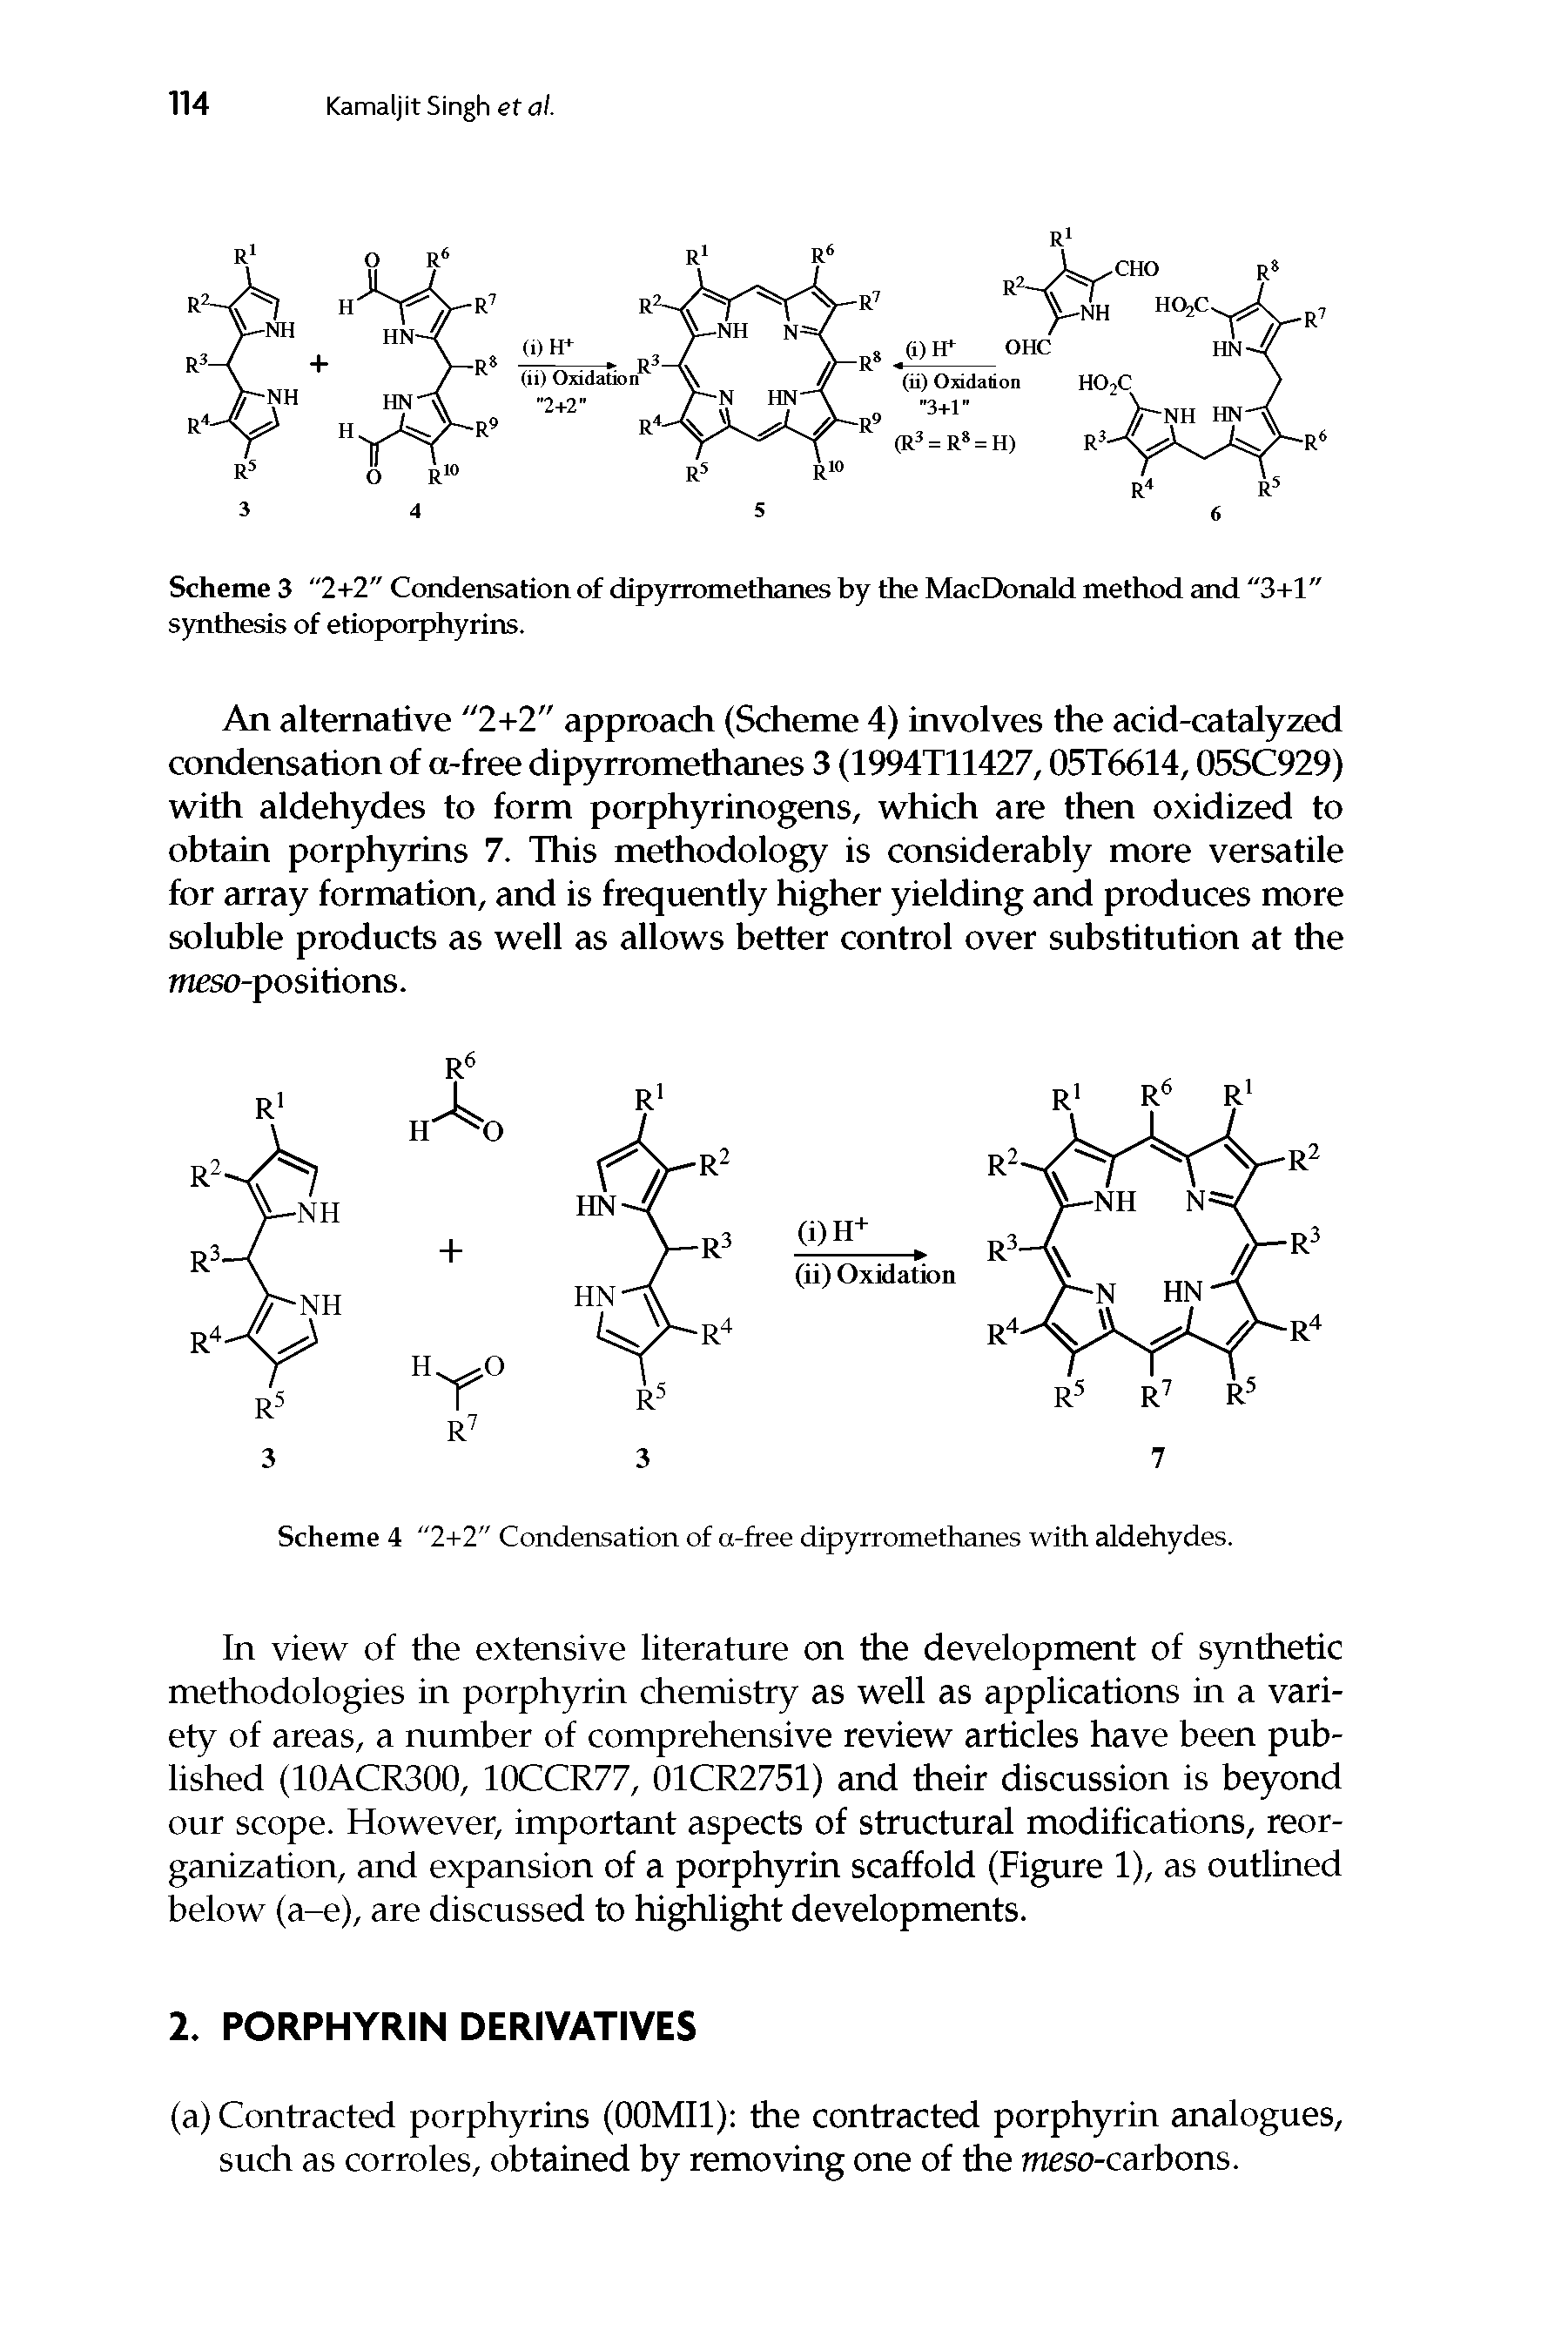 Scheme 4 2+2 Condensation of a-free dipyrromethanes with aldehydes.